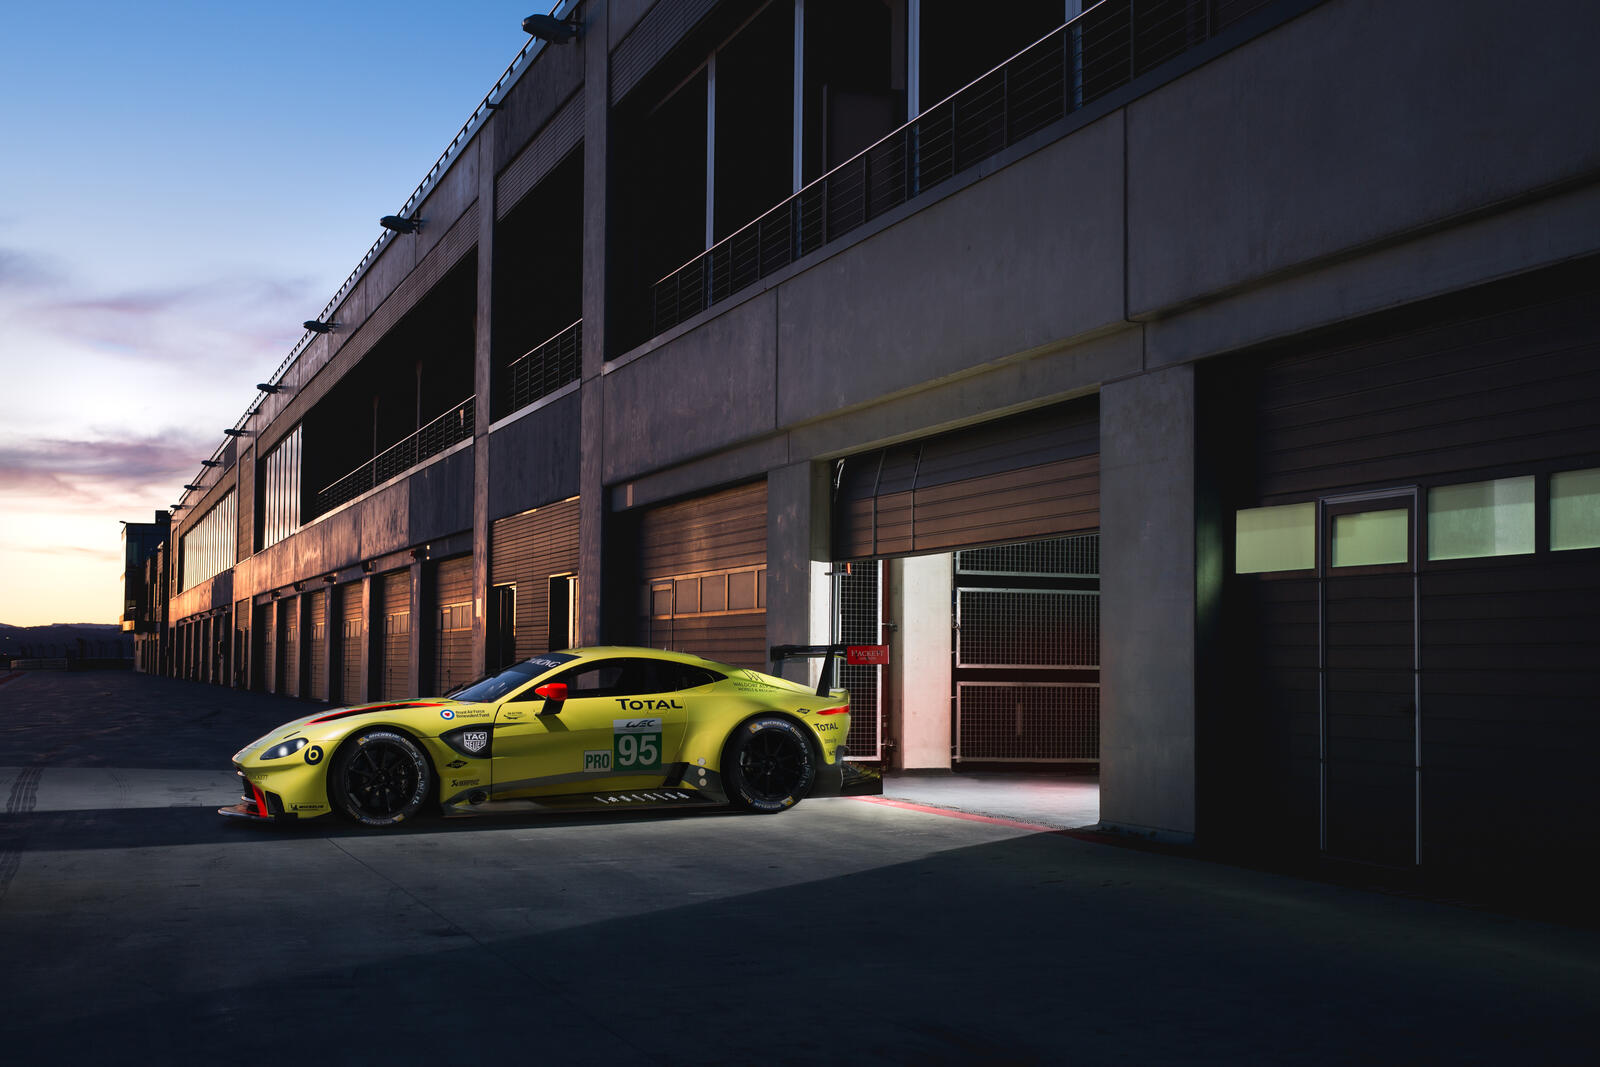 Бесплатное фото Aston Martin Vantage желтого цвета стоит у гаража